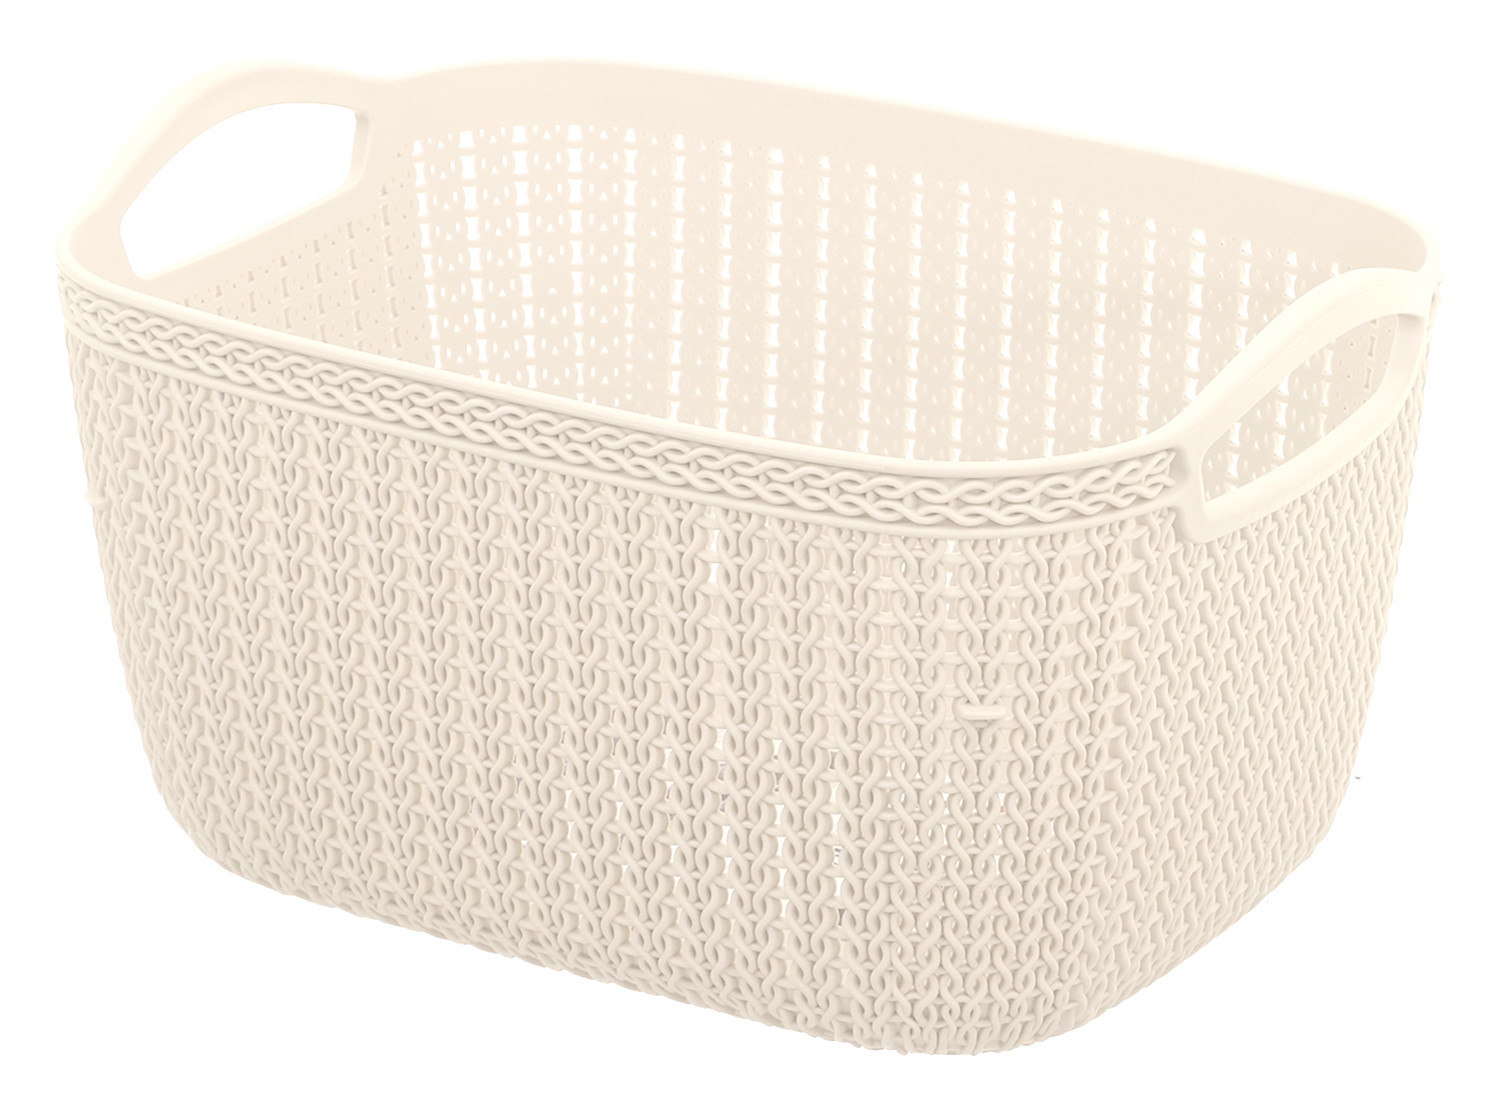 Kuber Industries Unbreakable Plastic Multipurpose Large Size Flexible Storage Baskets / Fruit Vegetable Bathroom Stationary Home Basket with Handles (Cream & Grey) -CTKTC37851